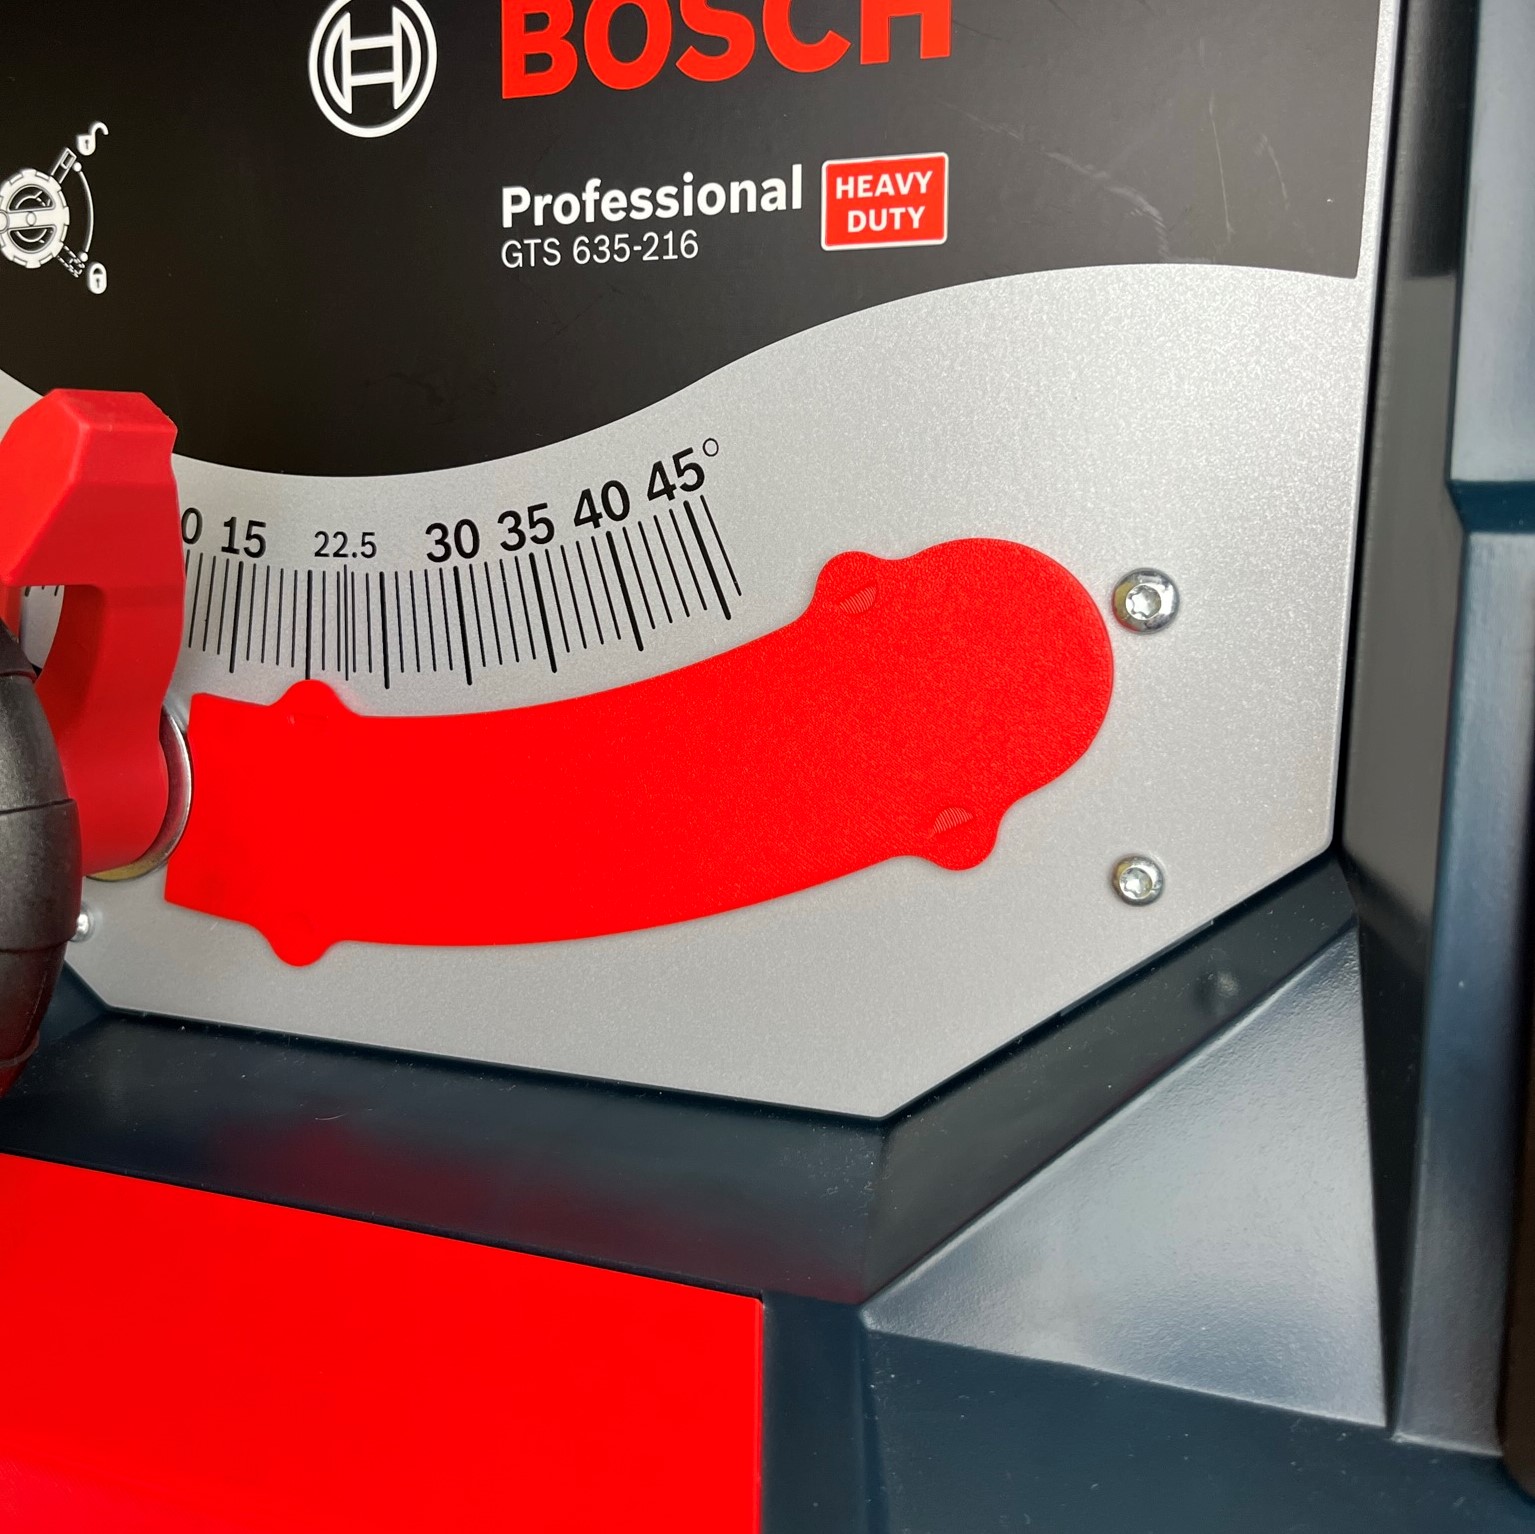 Bosch GTS 635-216 (Höhenverstellung defekt) + 5 Sägeblätter